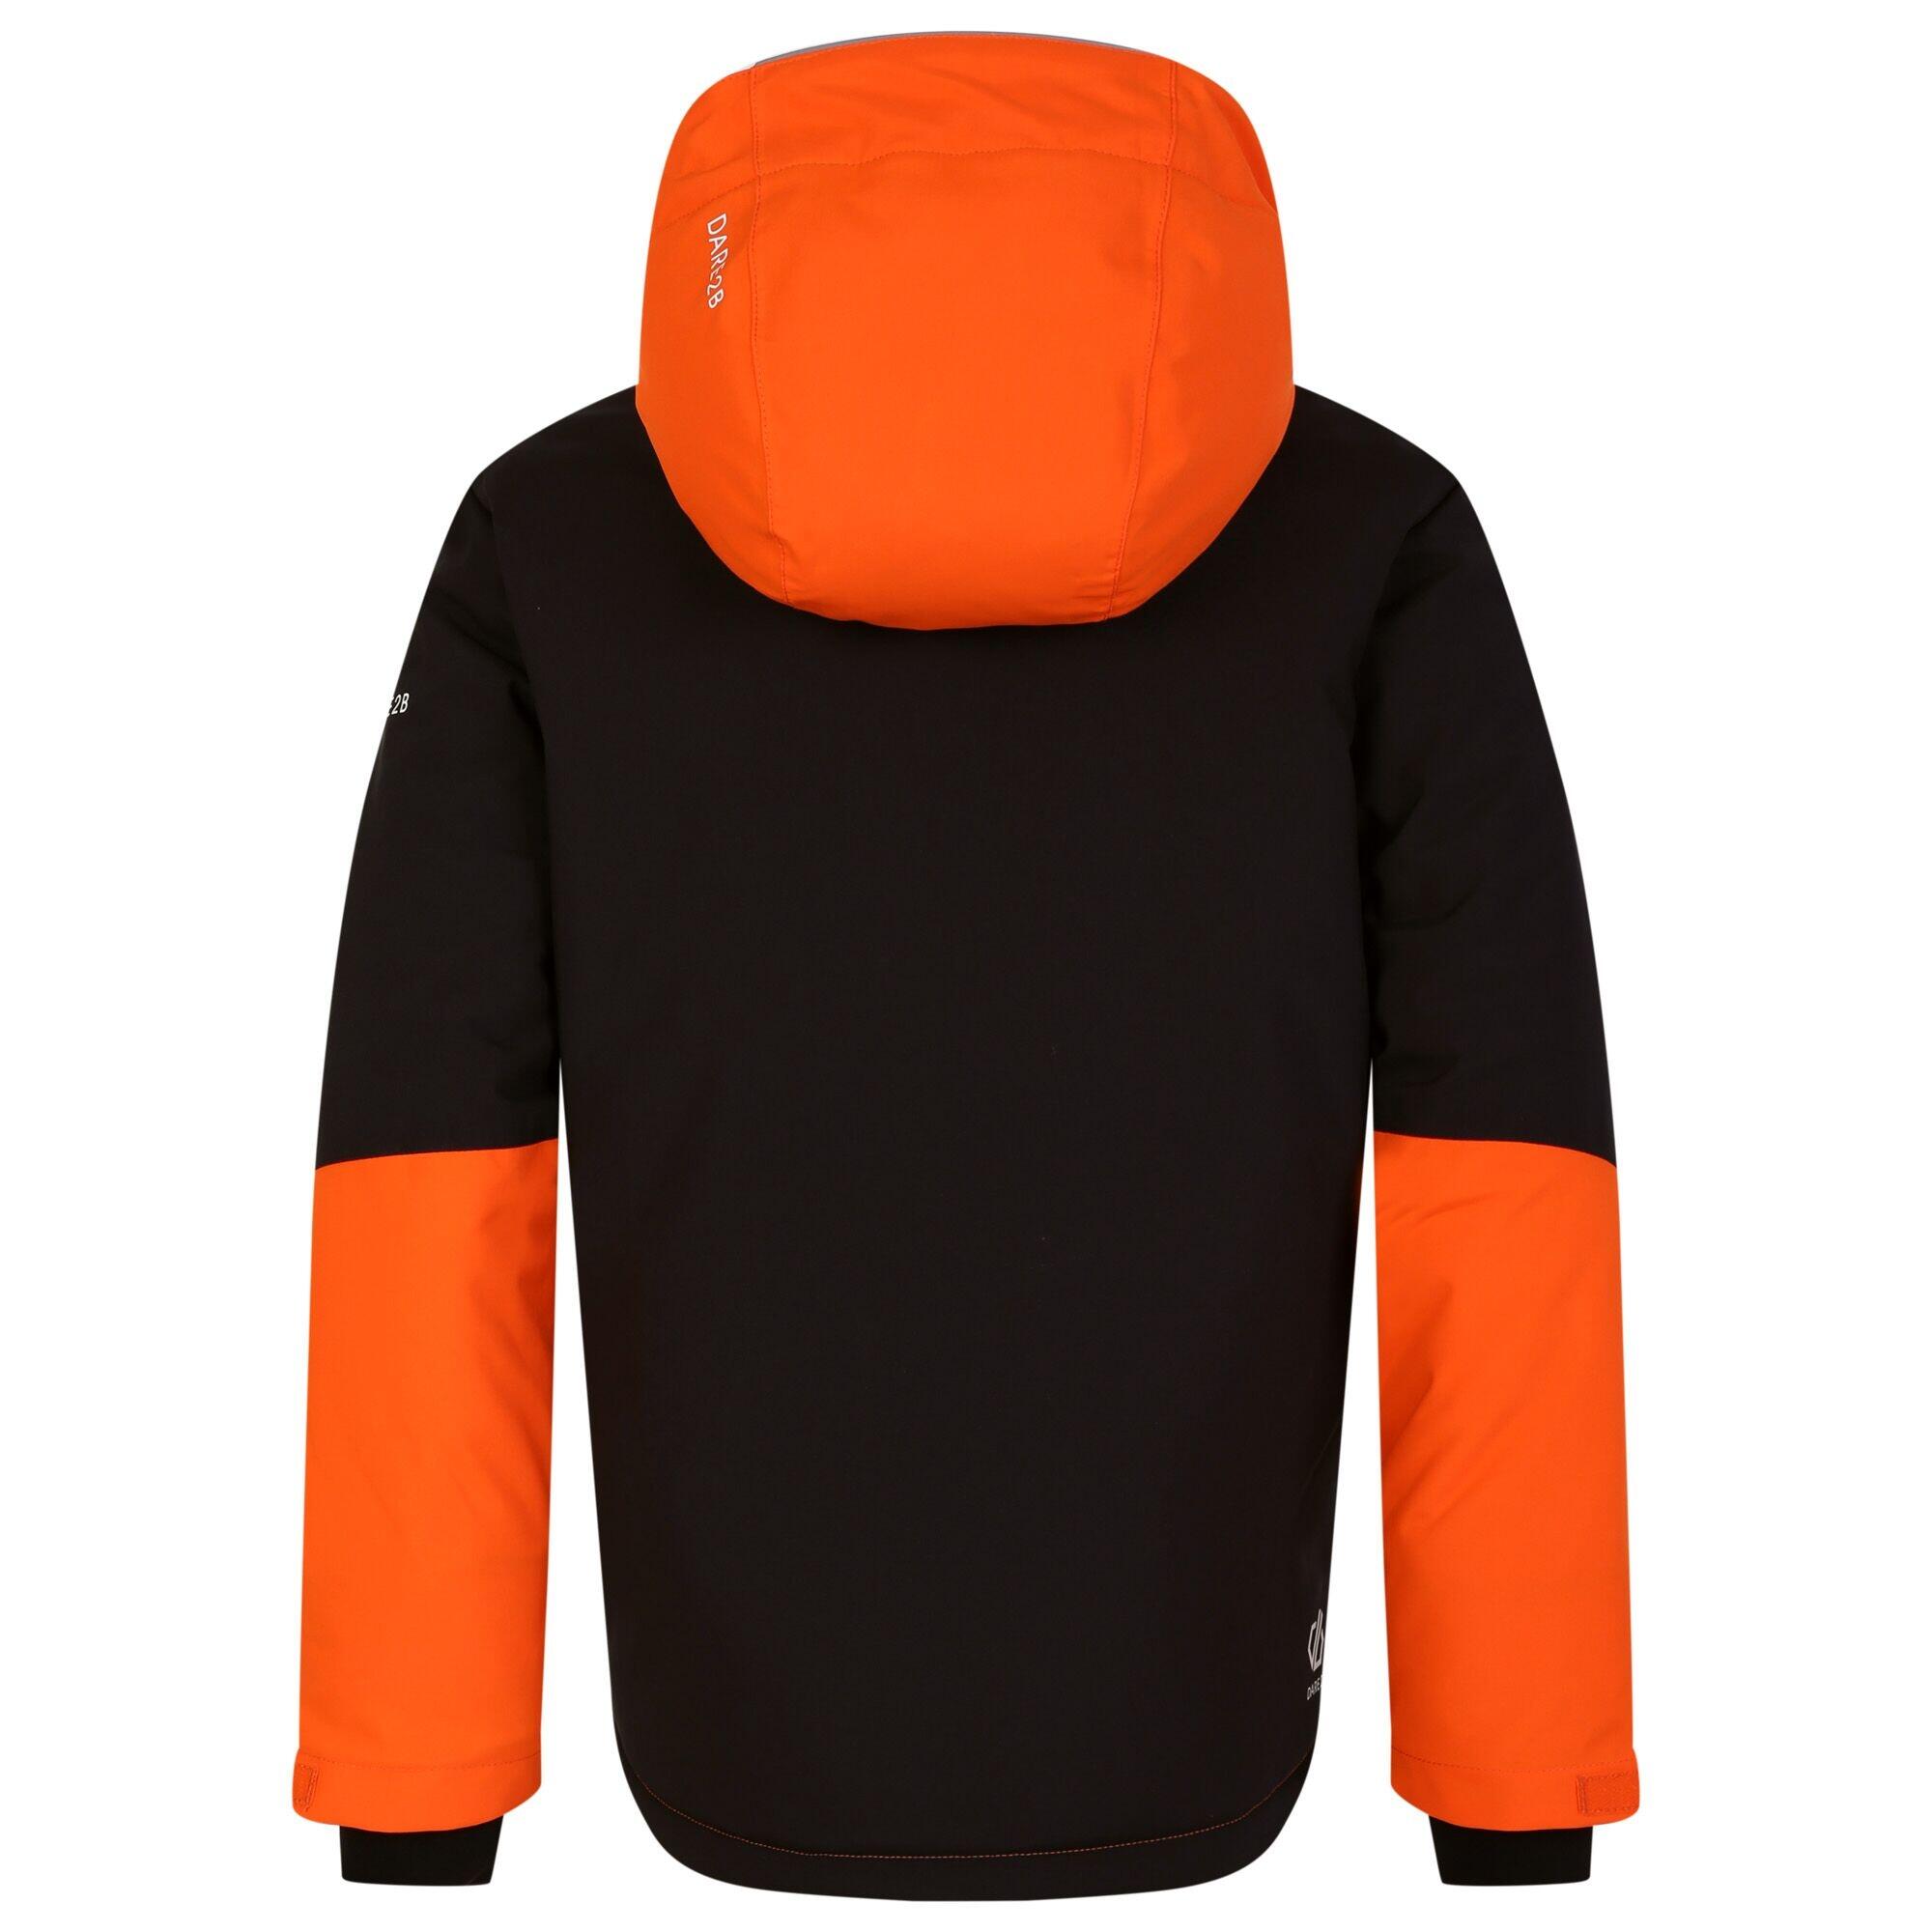 Childrens/Kids Steazy Ski Jacket (Puffins Orange/Black) 2/5